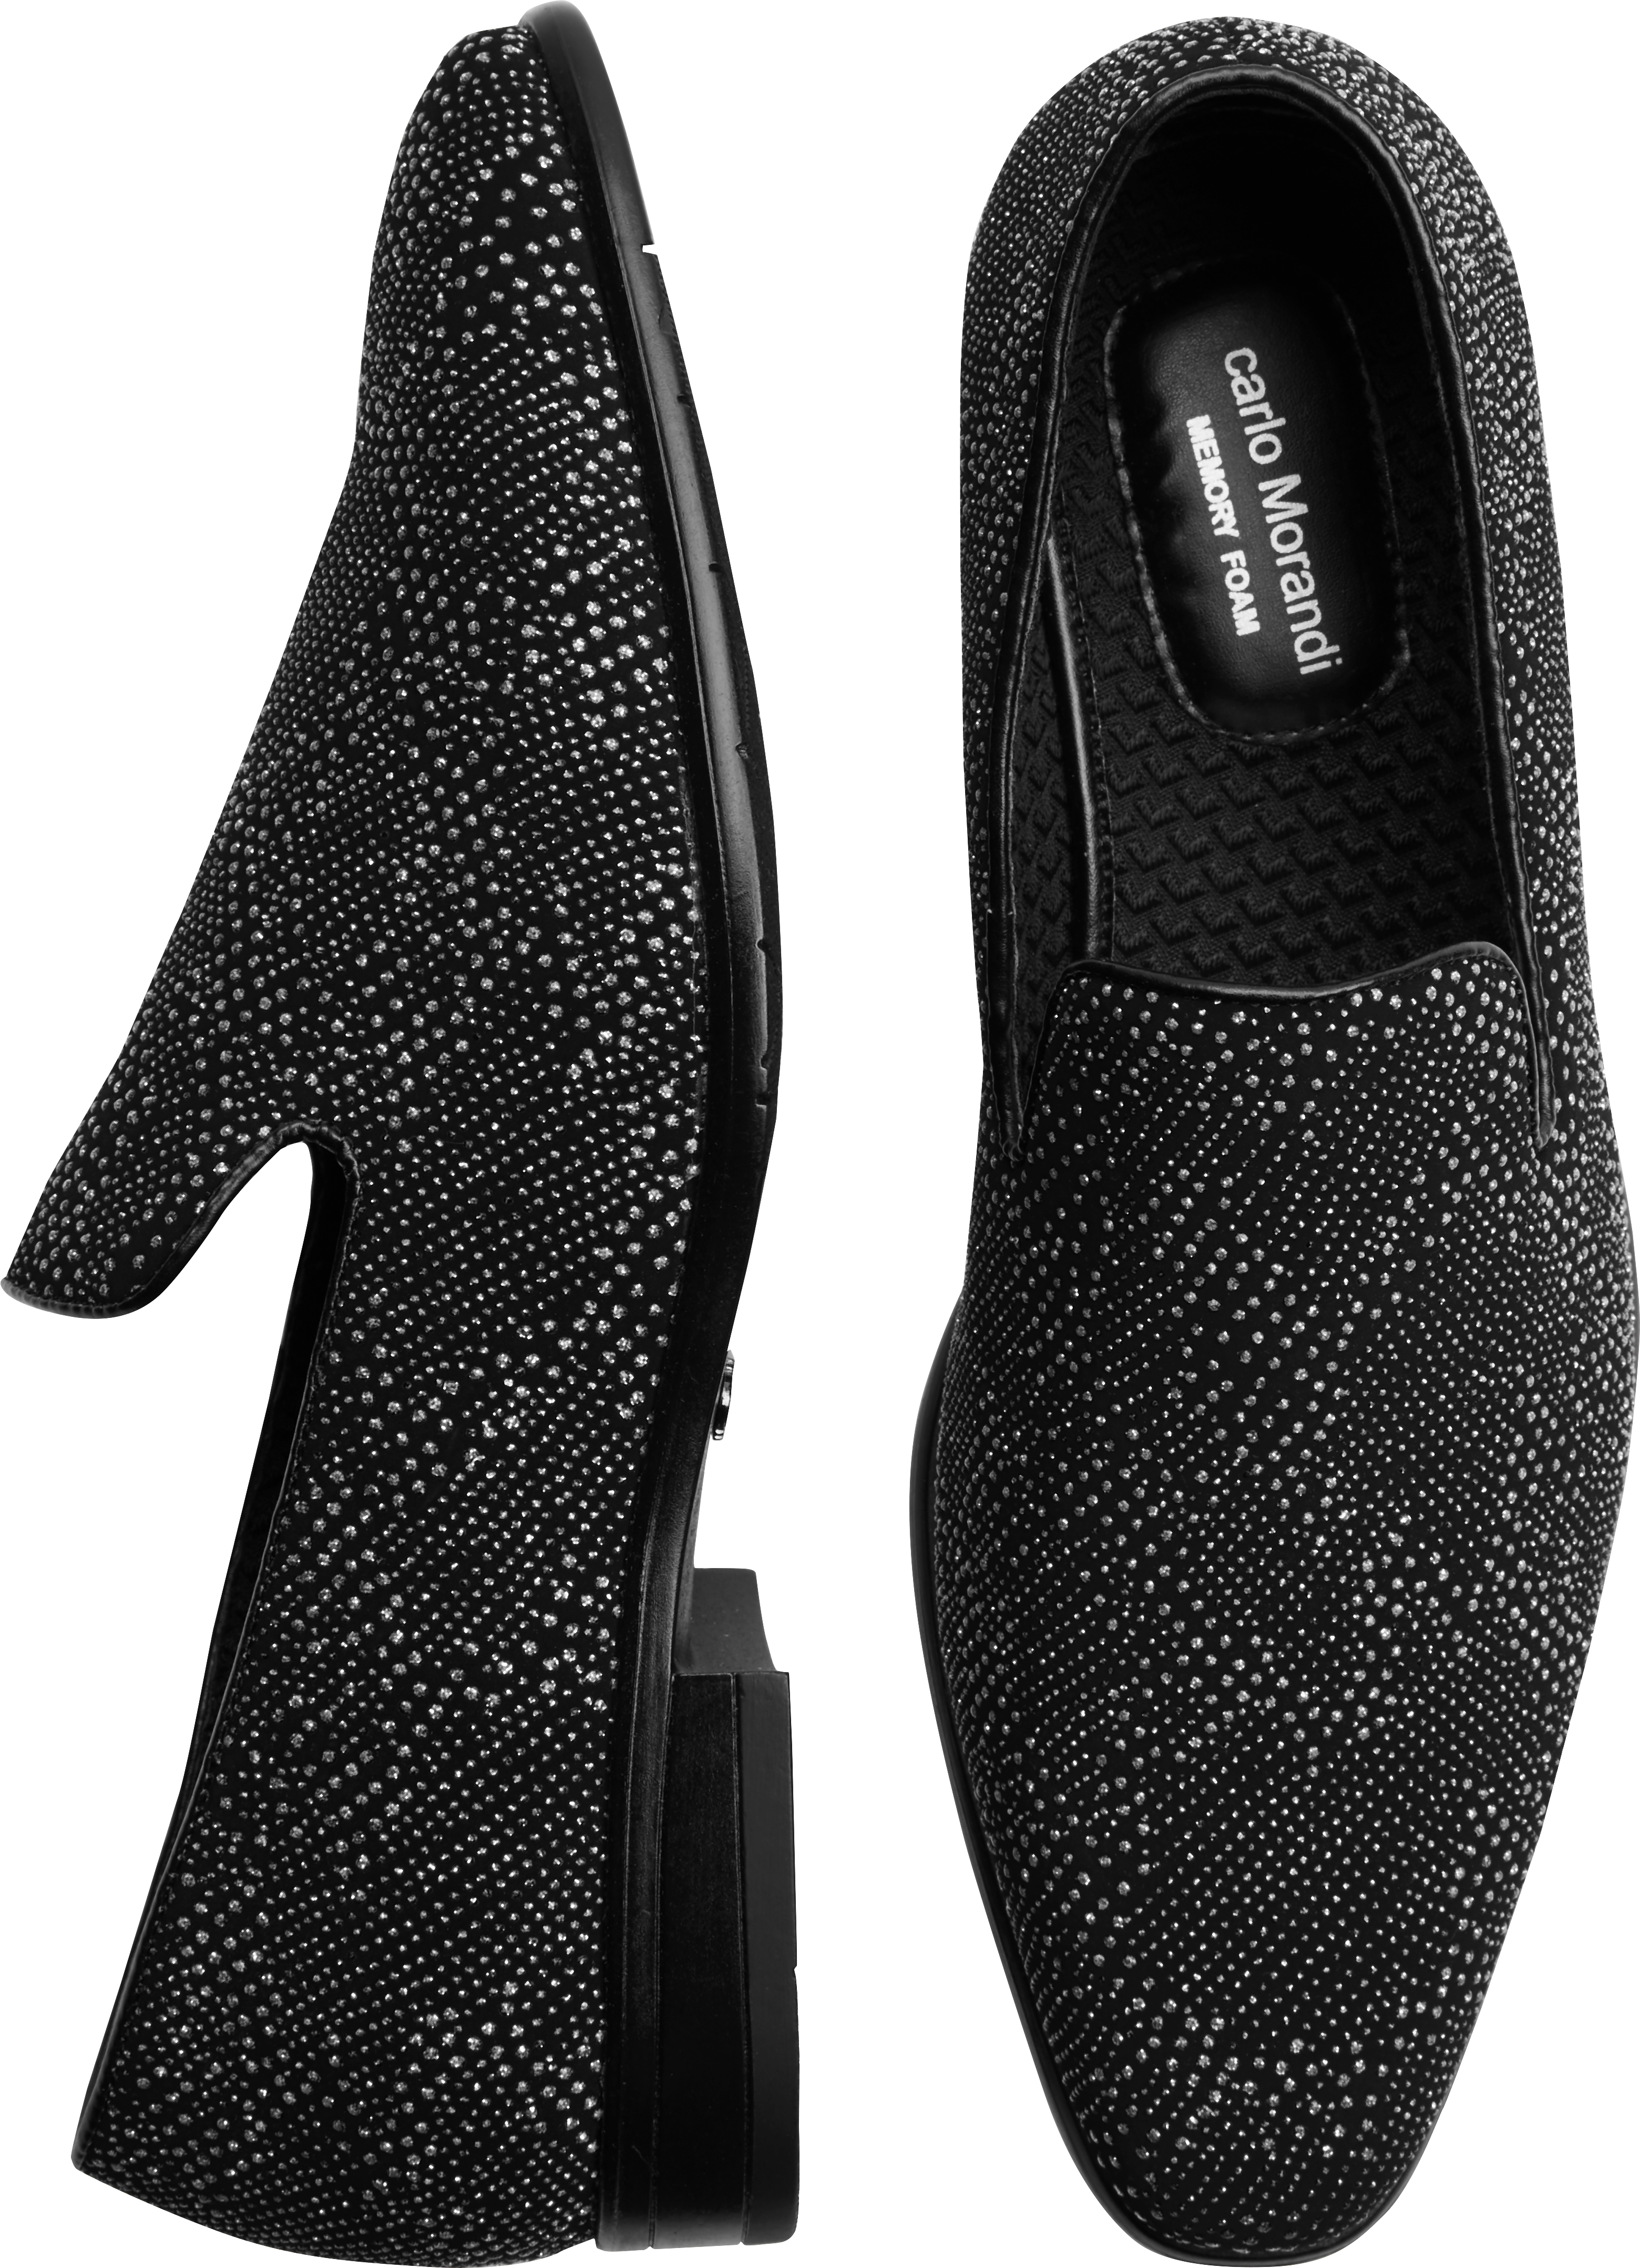 black sparkle slip on shoes